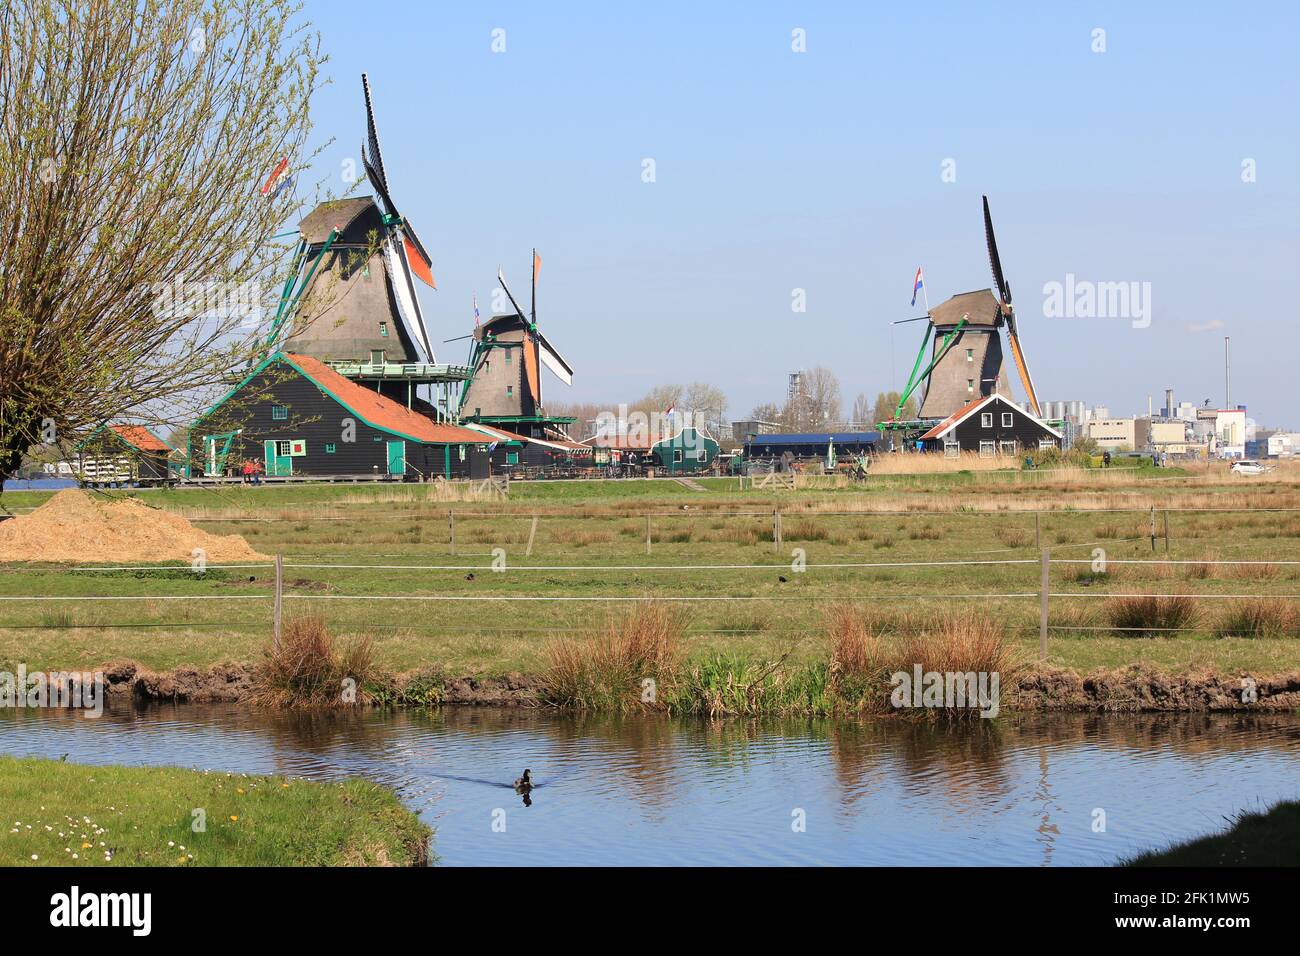 Zaanse Schans in the Netherlands Stock Photo